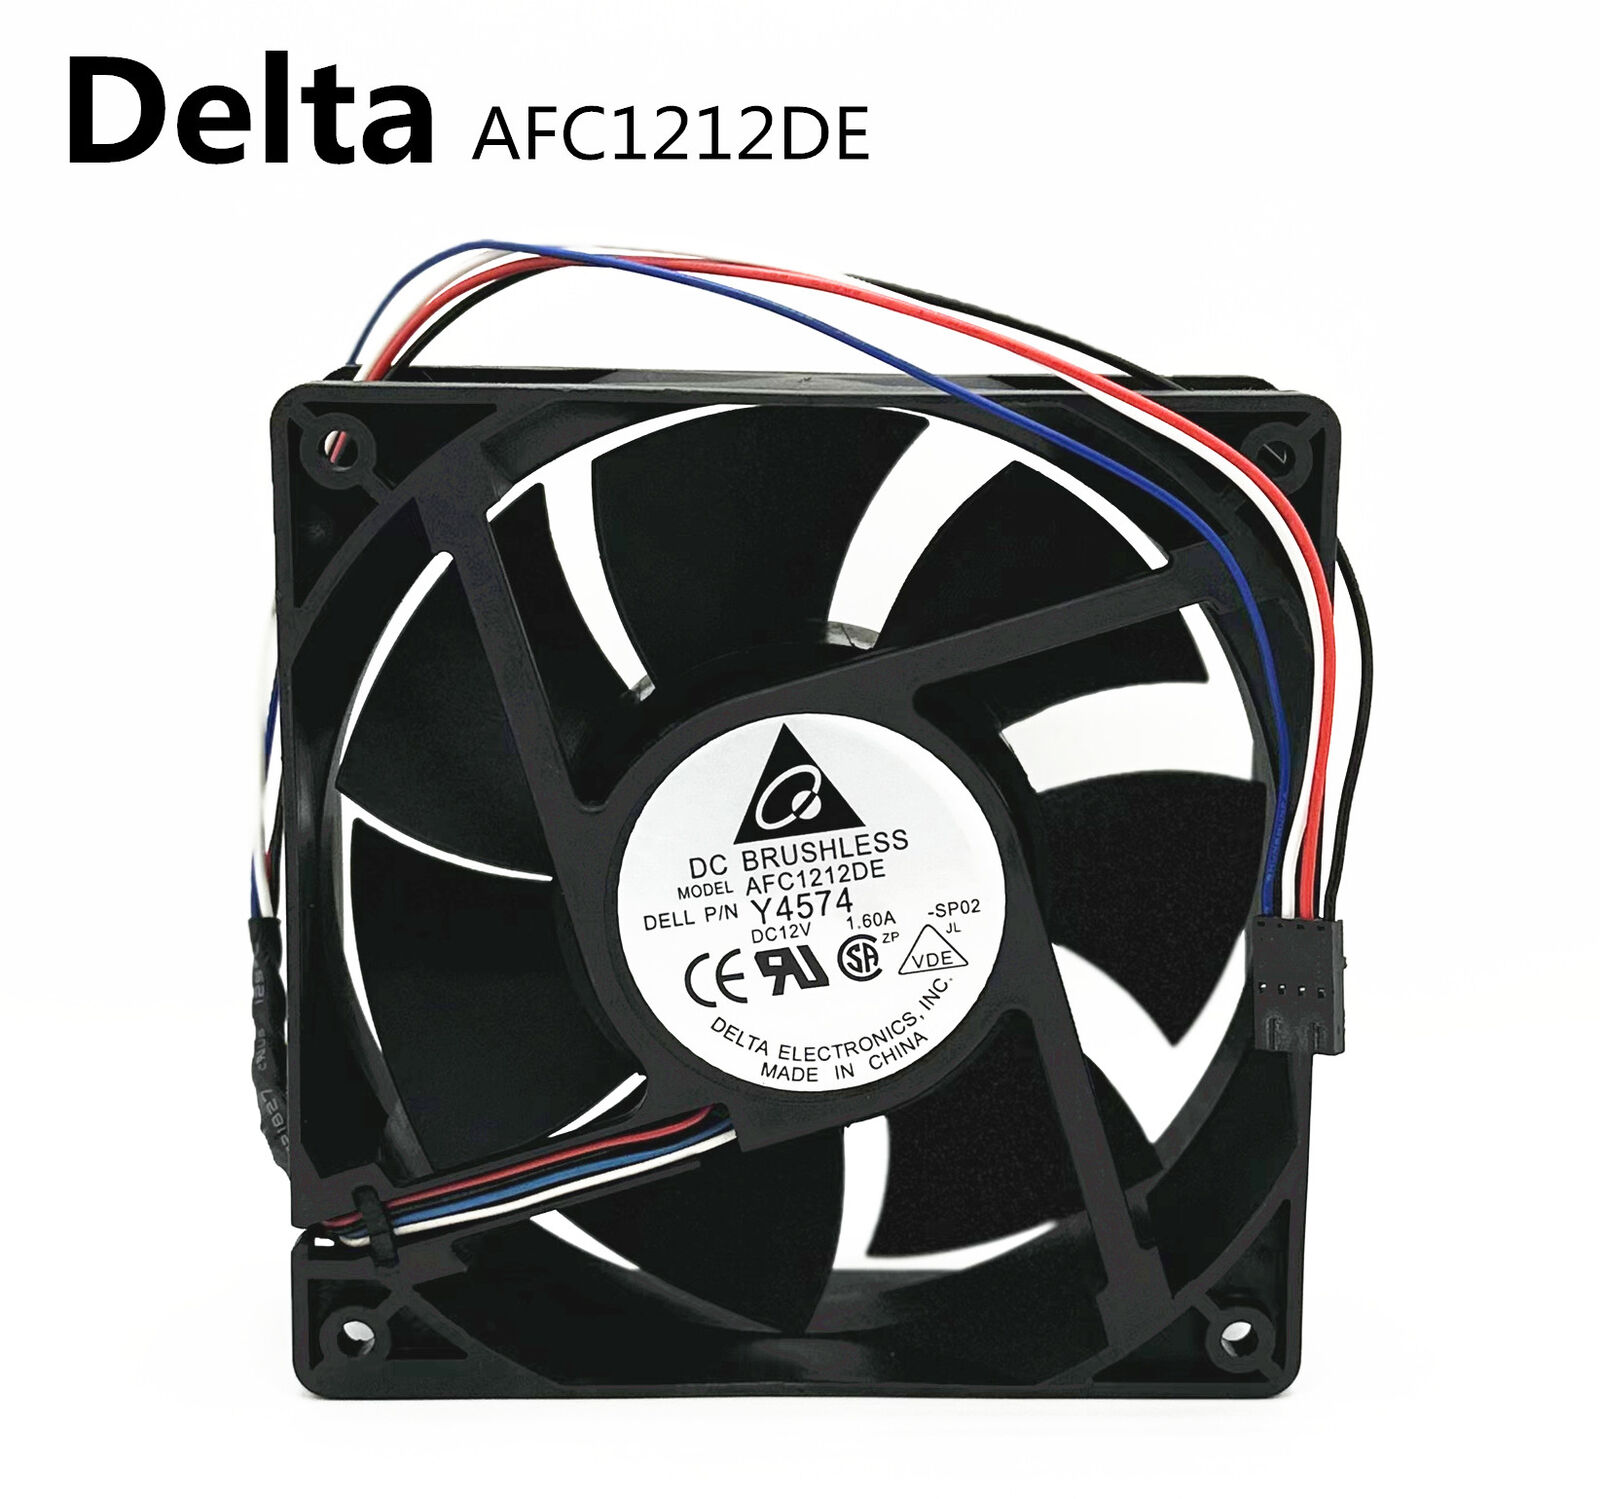 Delta AFC1212DE 12038 12V 1.6A 12CM 4 Line Ant PWM High Speed Cooling Fan